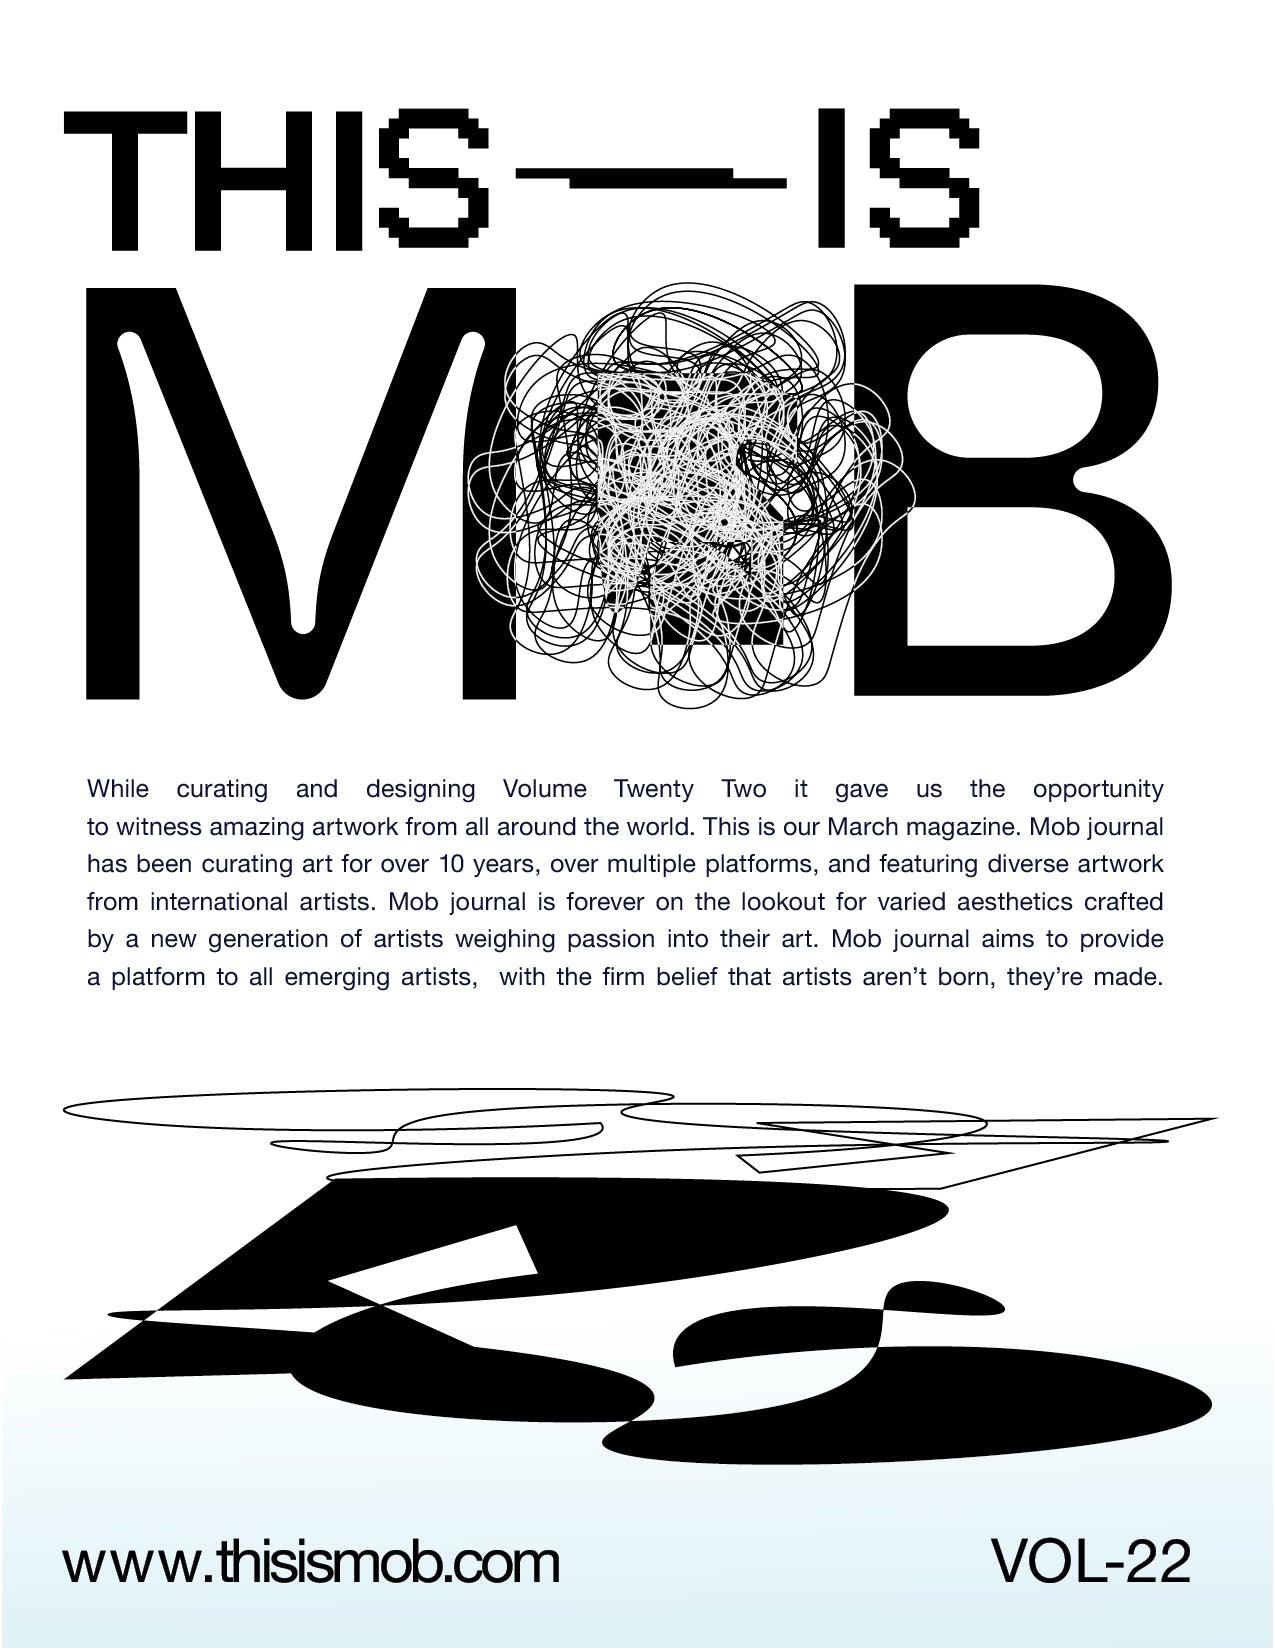 MOB JOURNAL | VOLUME TWENTY TWO | ISSUE #61 - Mob Journal